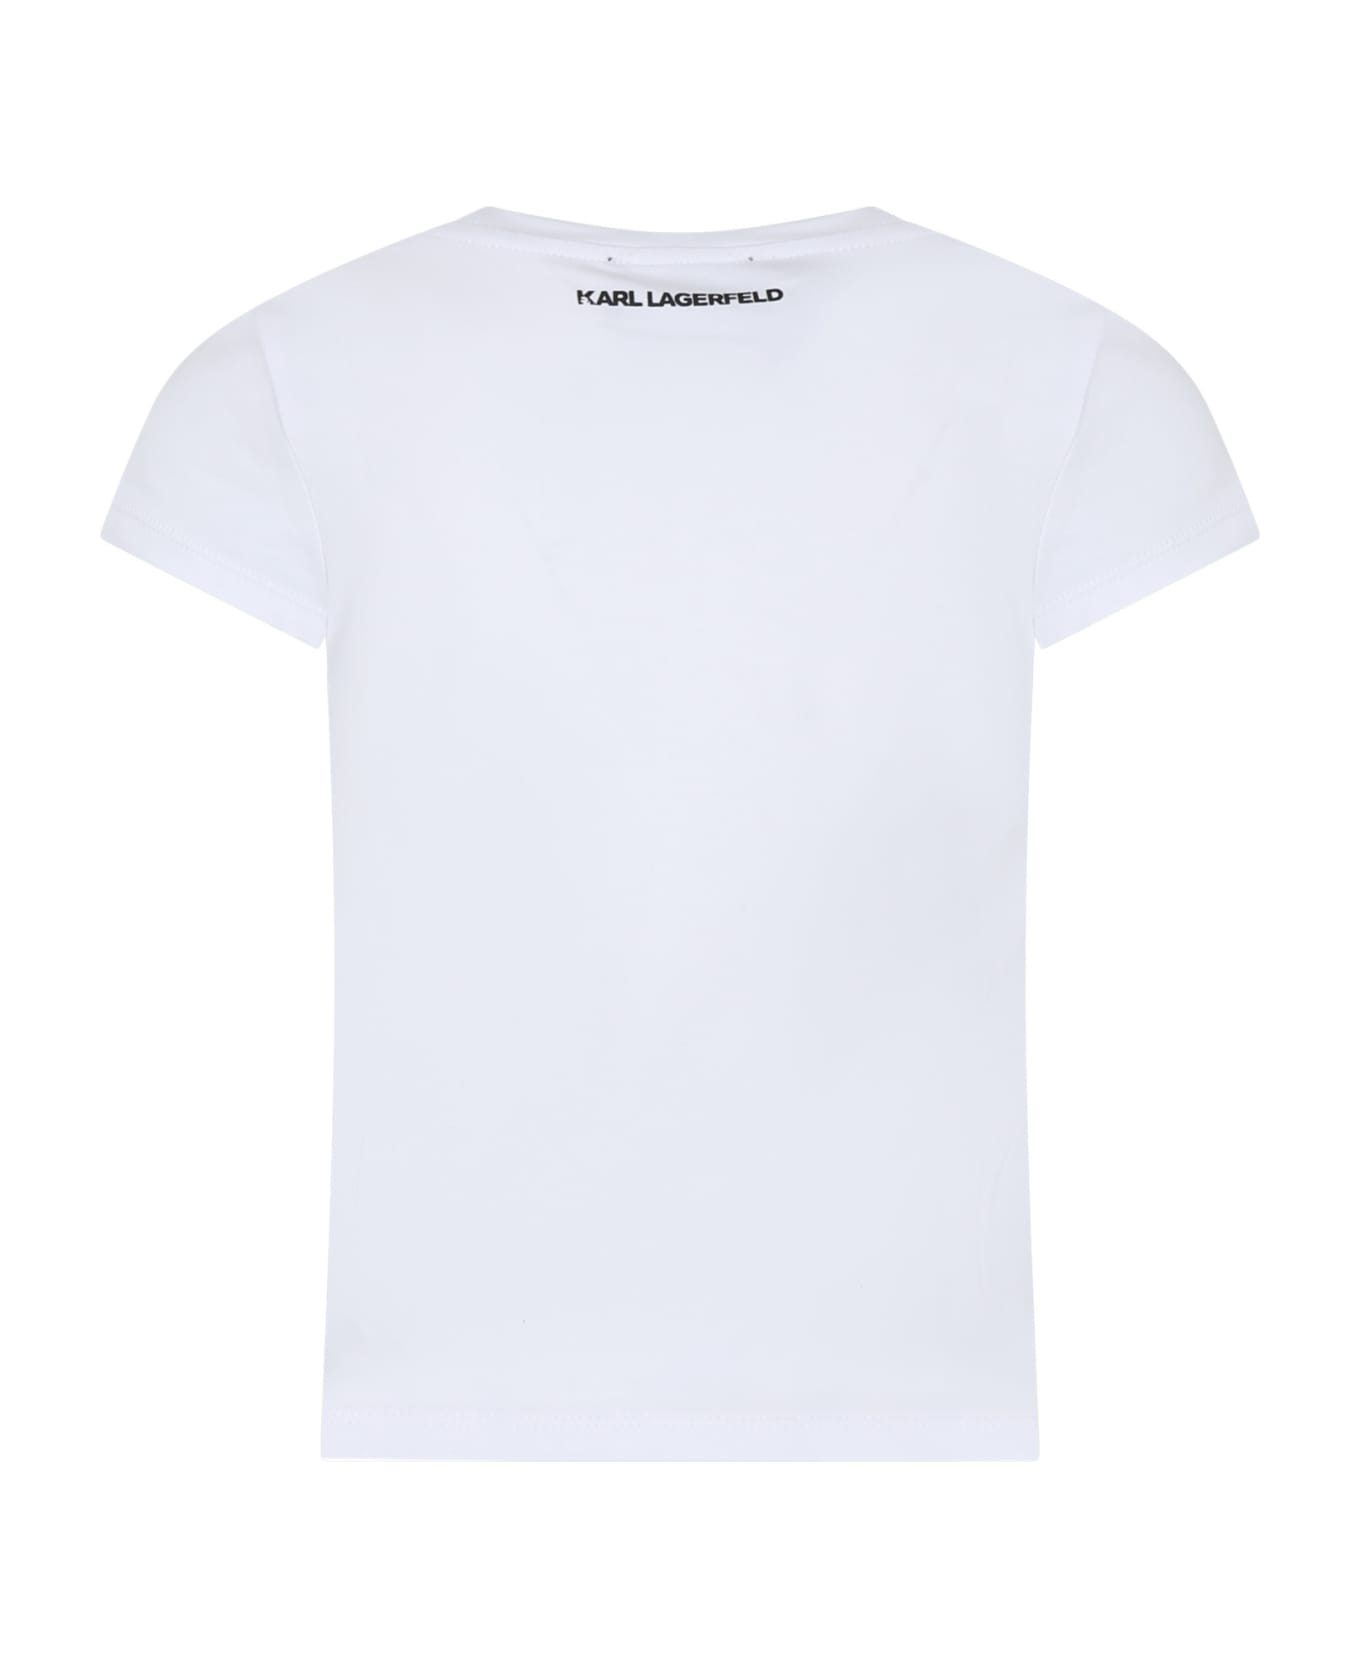 Karl Lagerfeld Kids White T-shirt For Girl With Rhinestone Logo Print - White